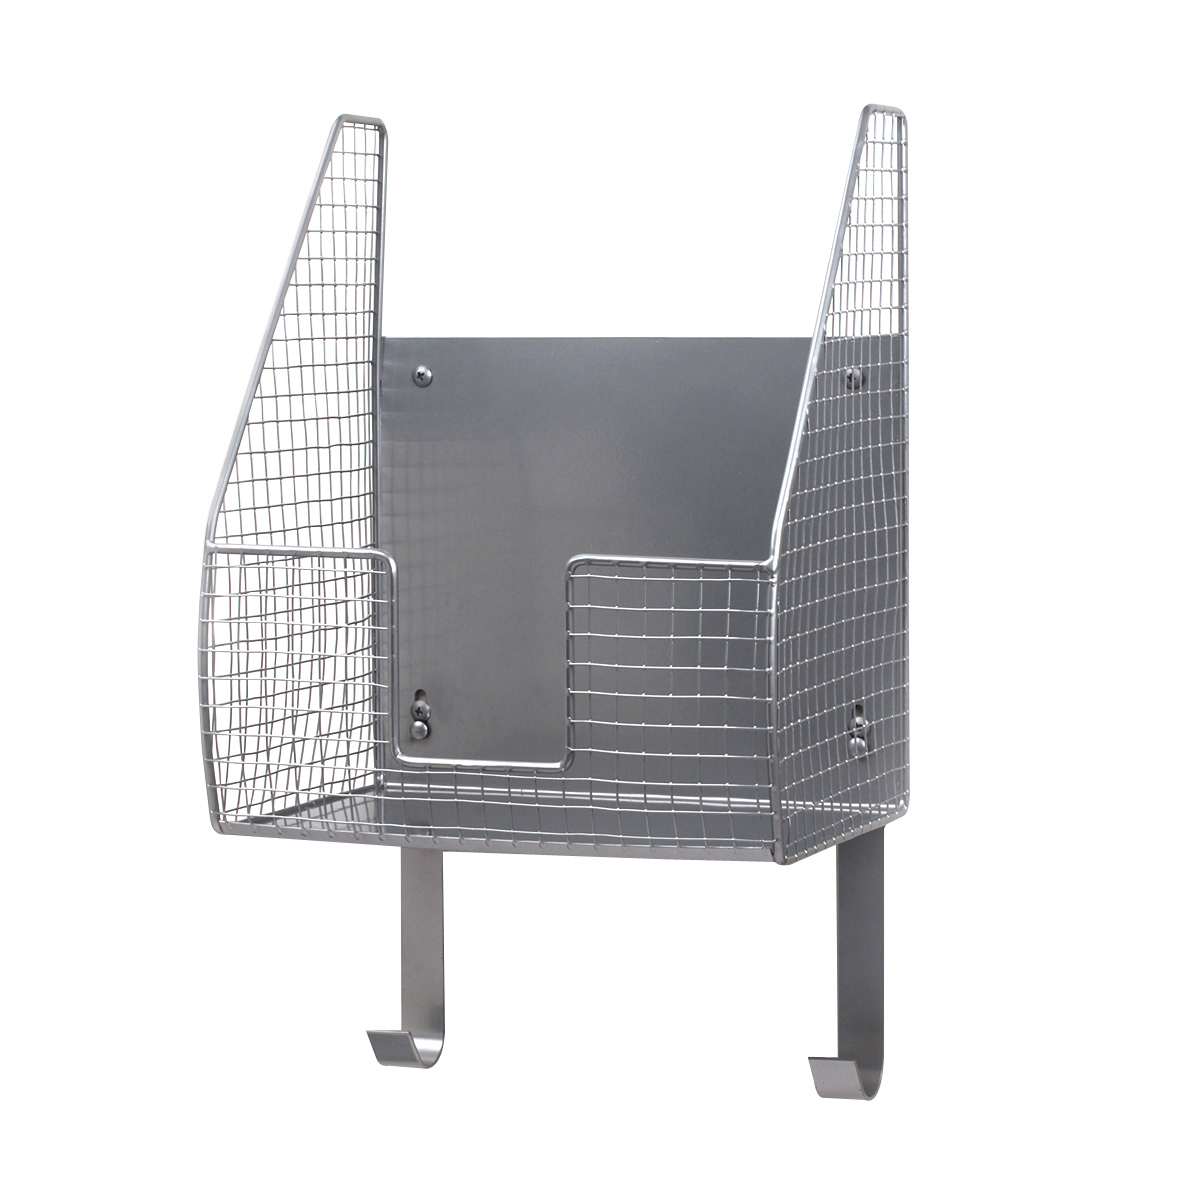 Spectrum Diversified Steel Ironing Board Holder with Storage Basket, Heat Resistant, Pewter - image 1 of 5